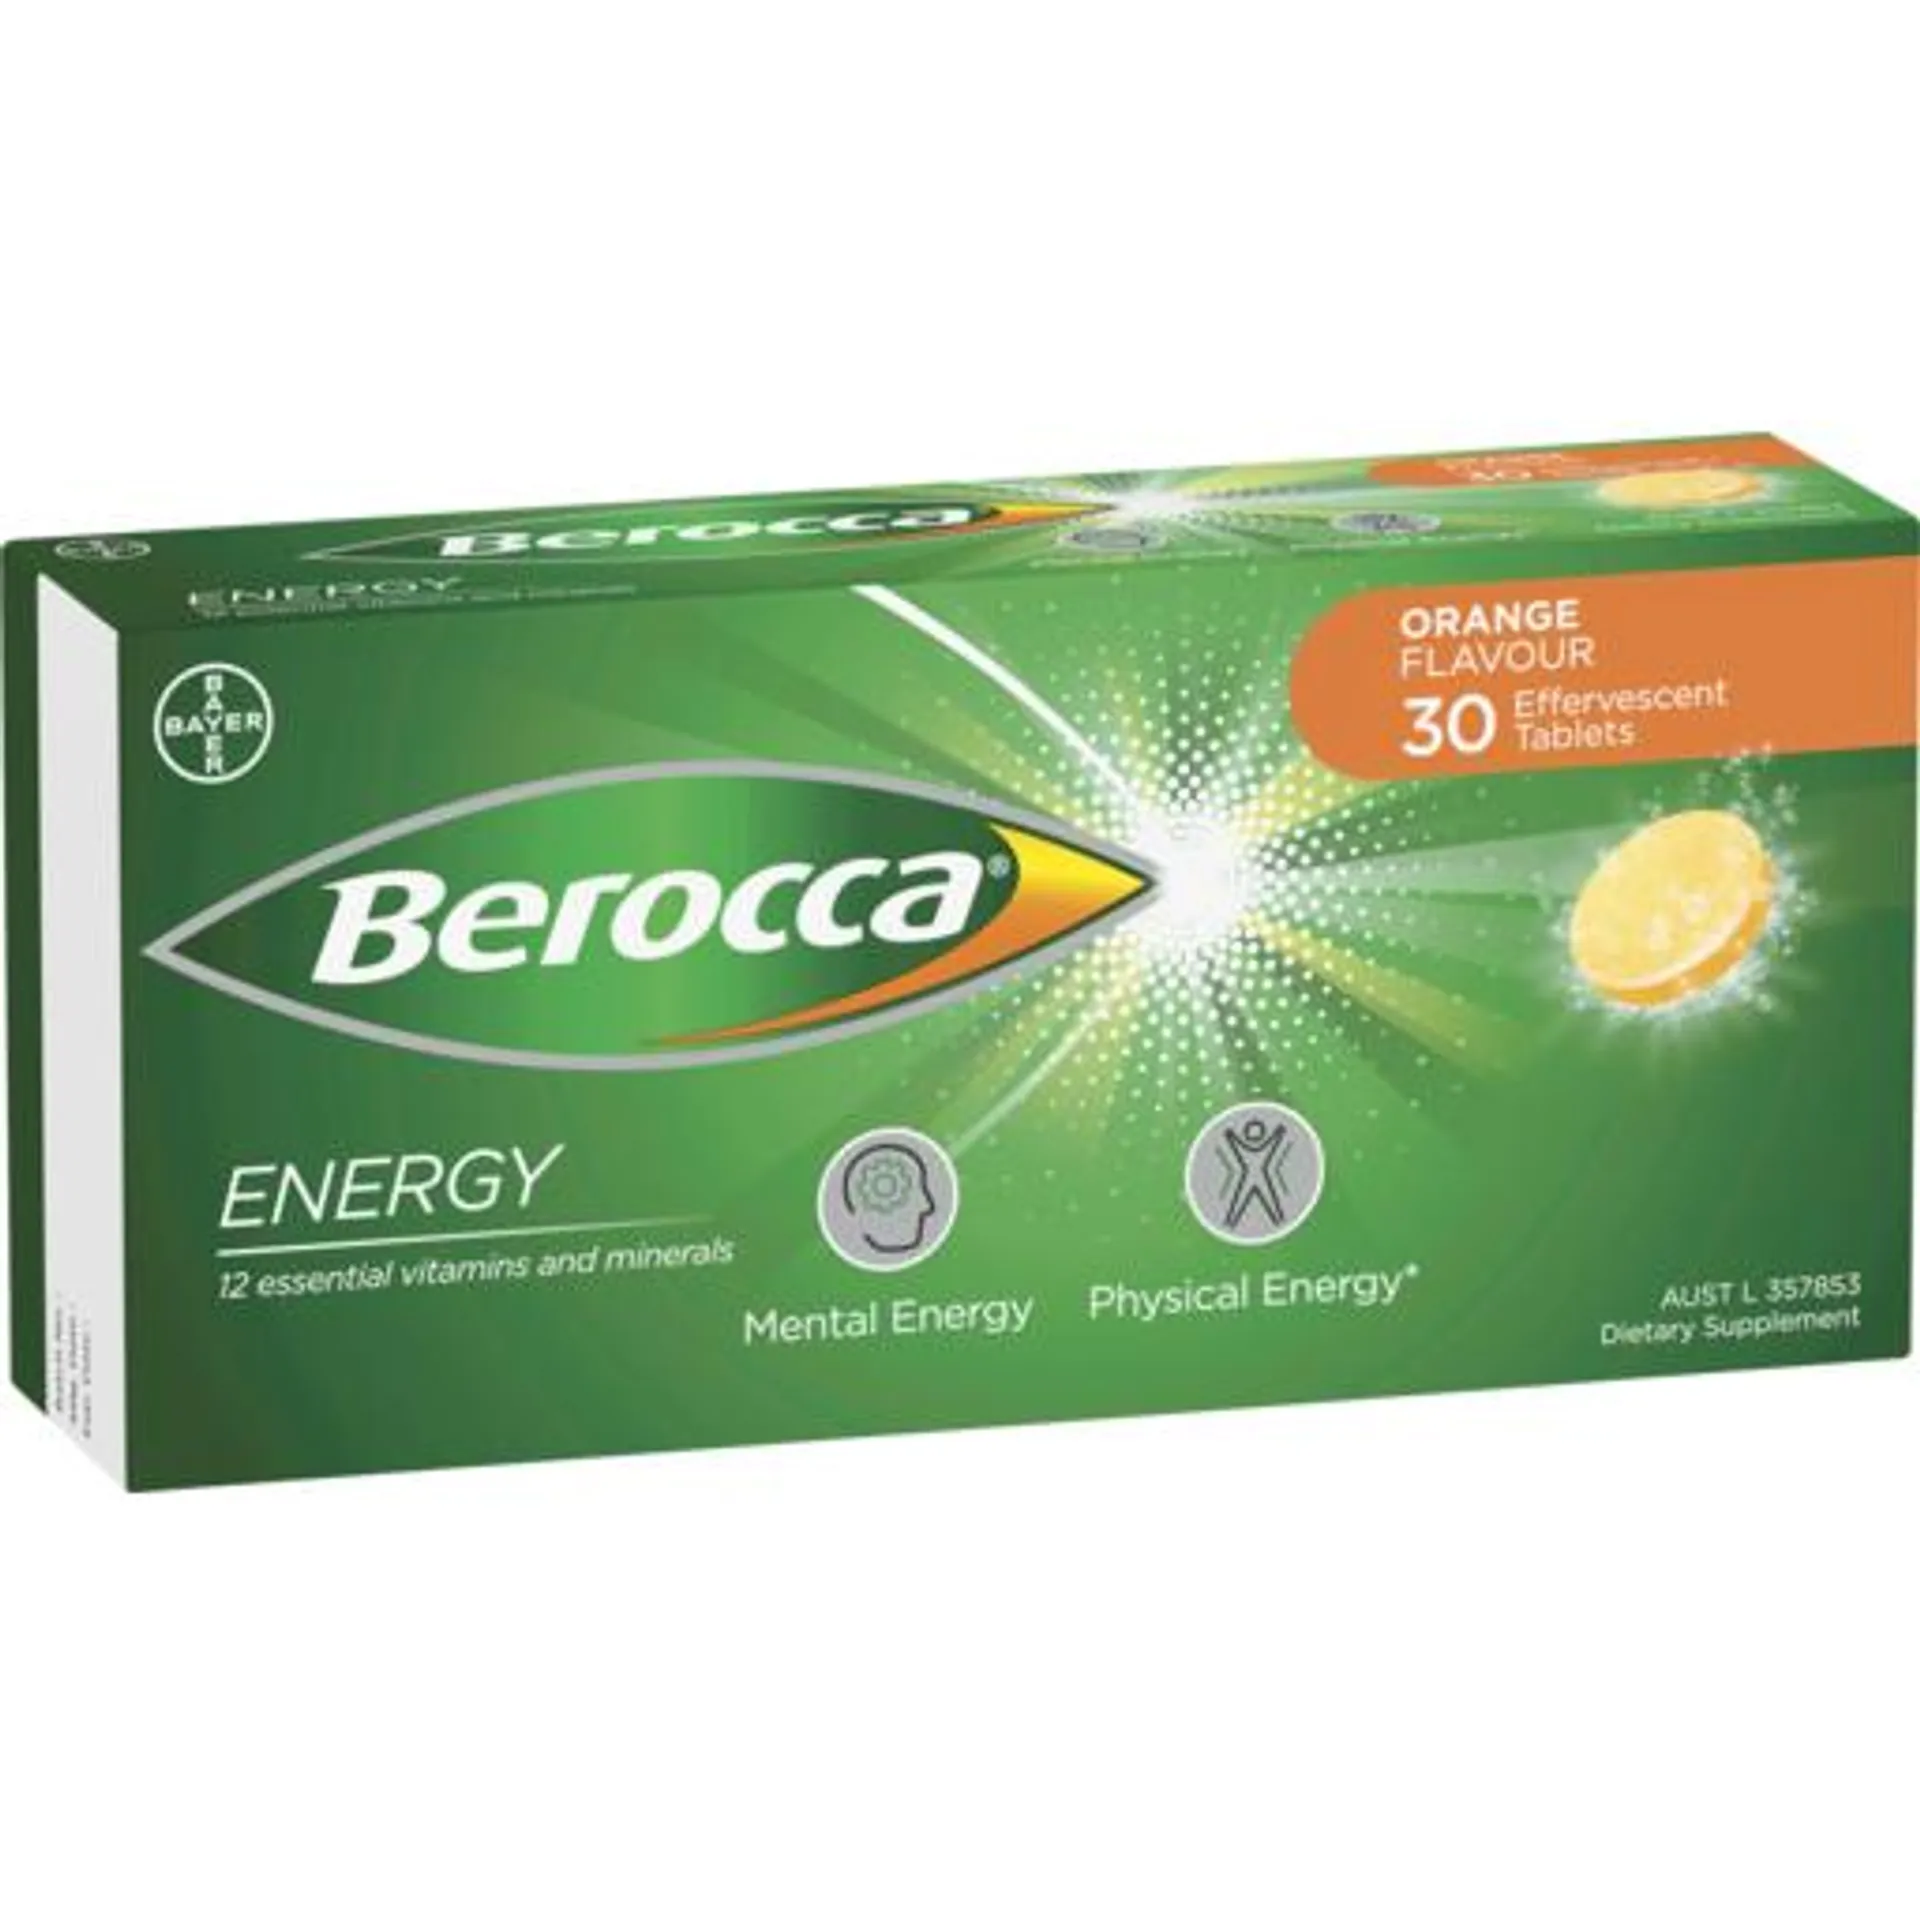 Berocca Energy Tablets Orange Flavour Effervescent Tablets 30 Pack